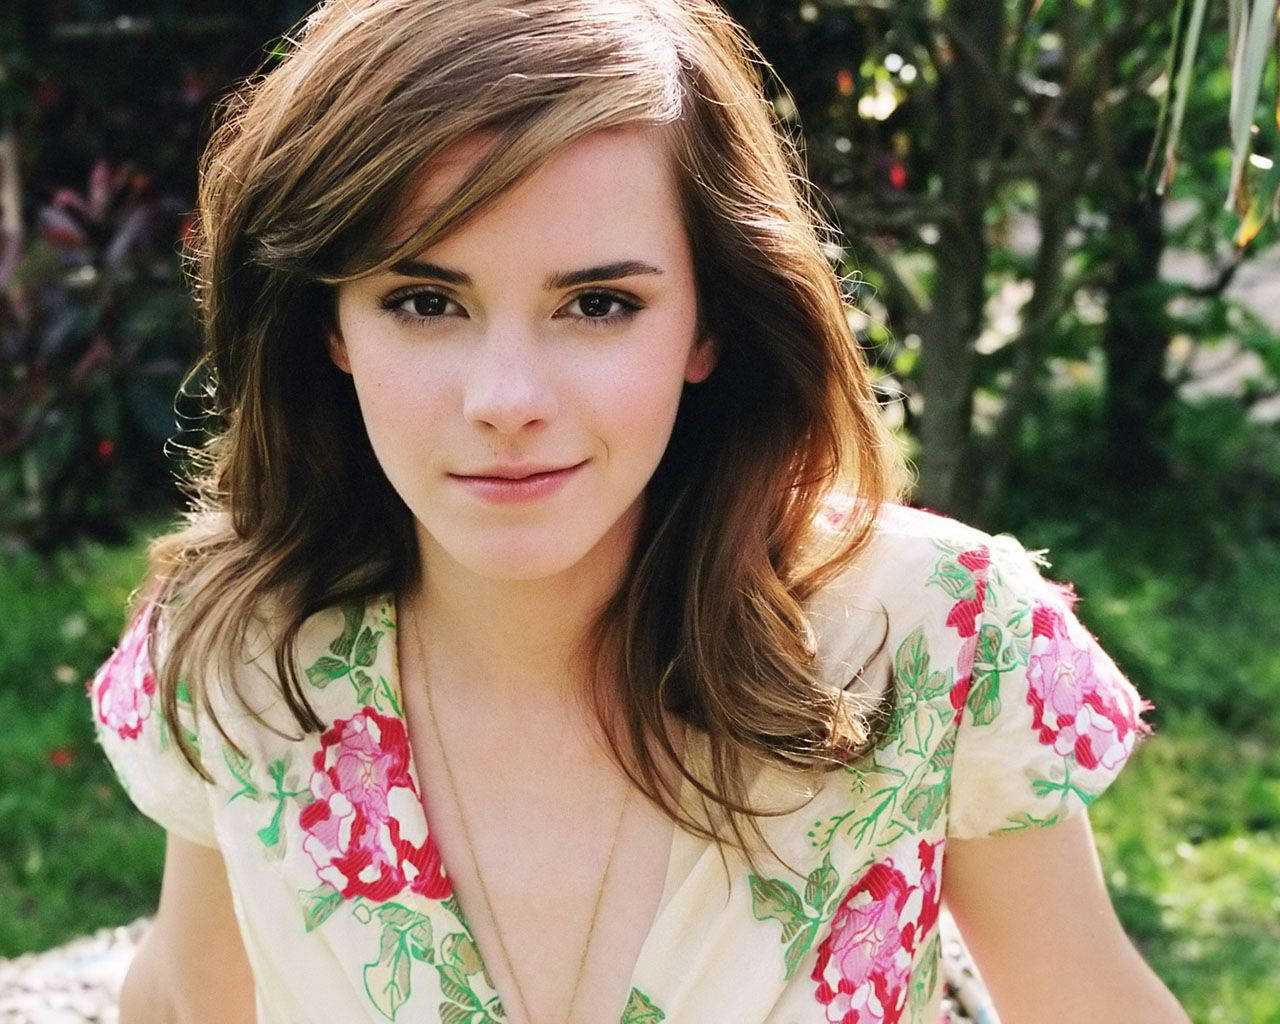 Emma Watson Channeling A Modern-day Princess In A Beautiful Floral Dress